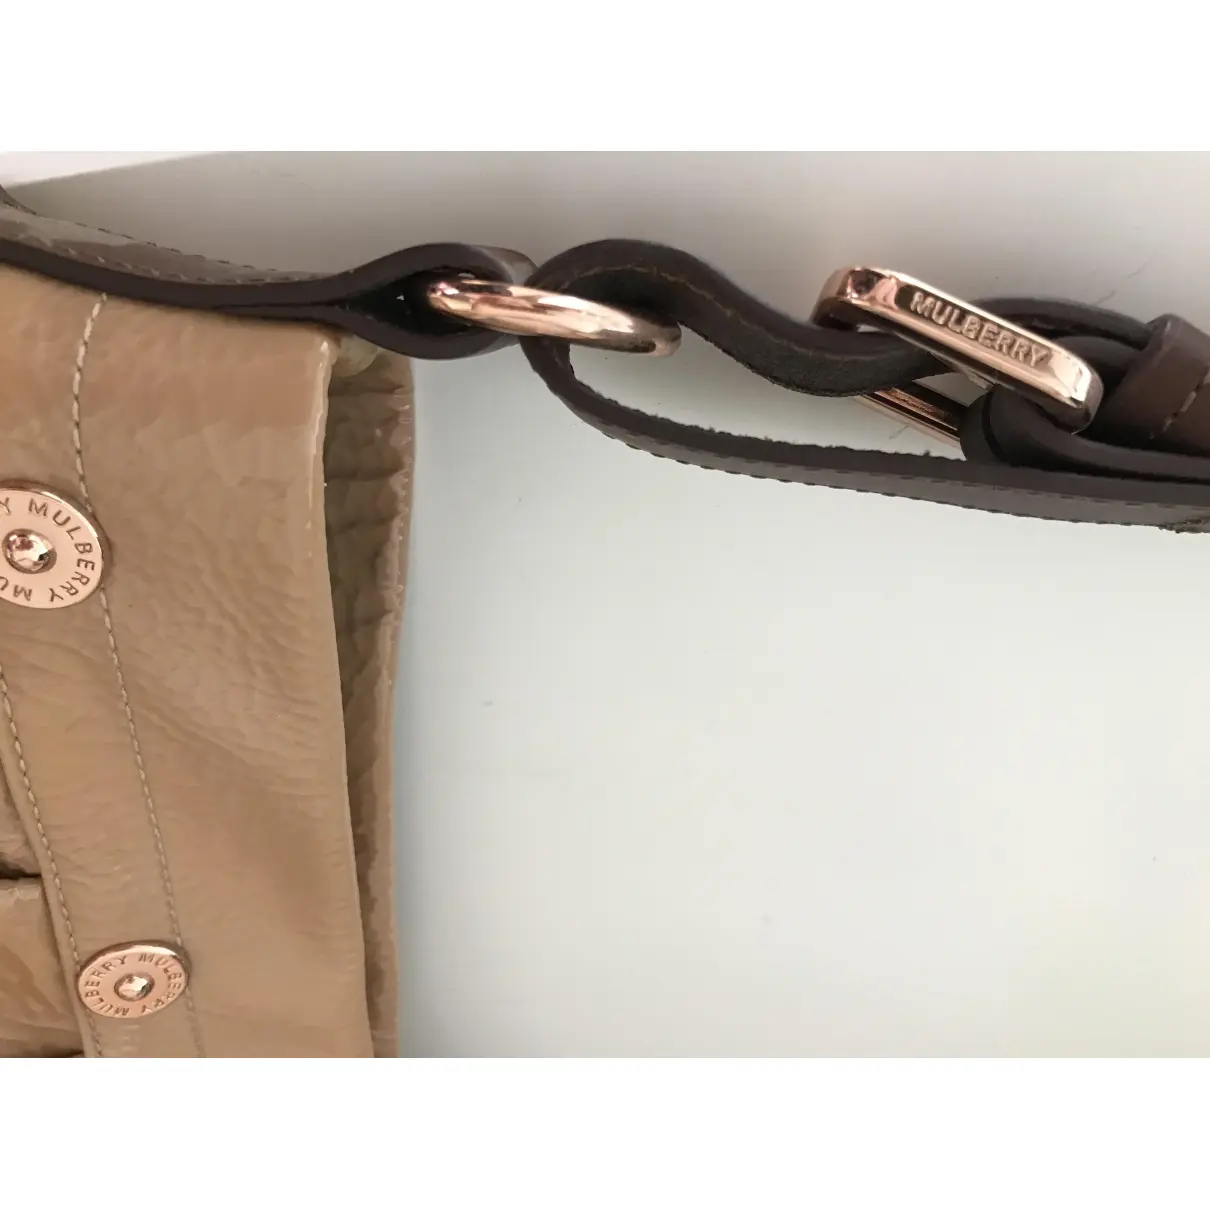 Patent leather handbag Mulberry